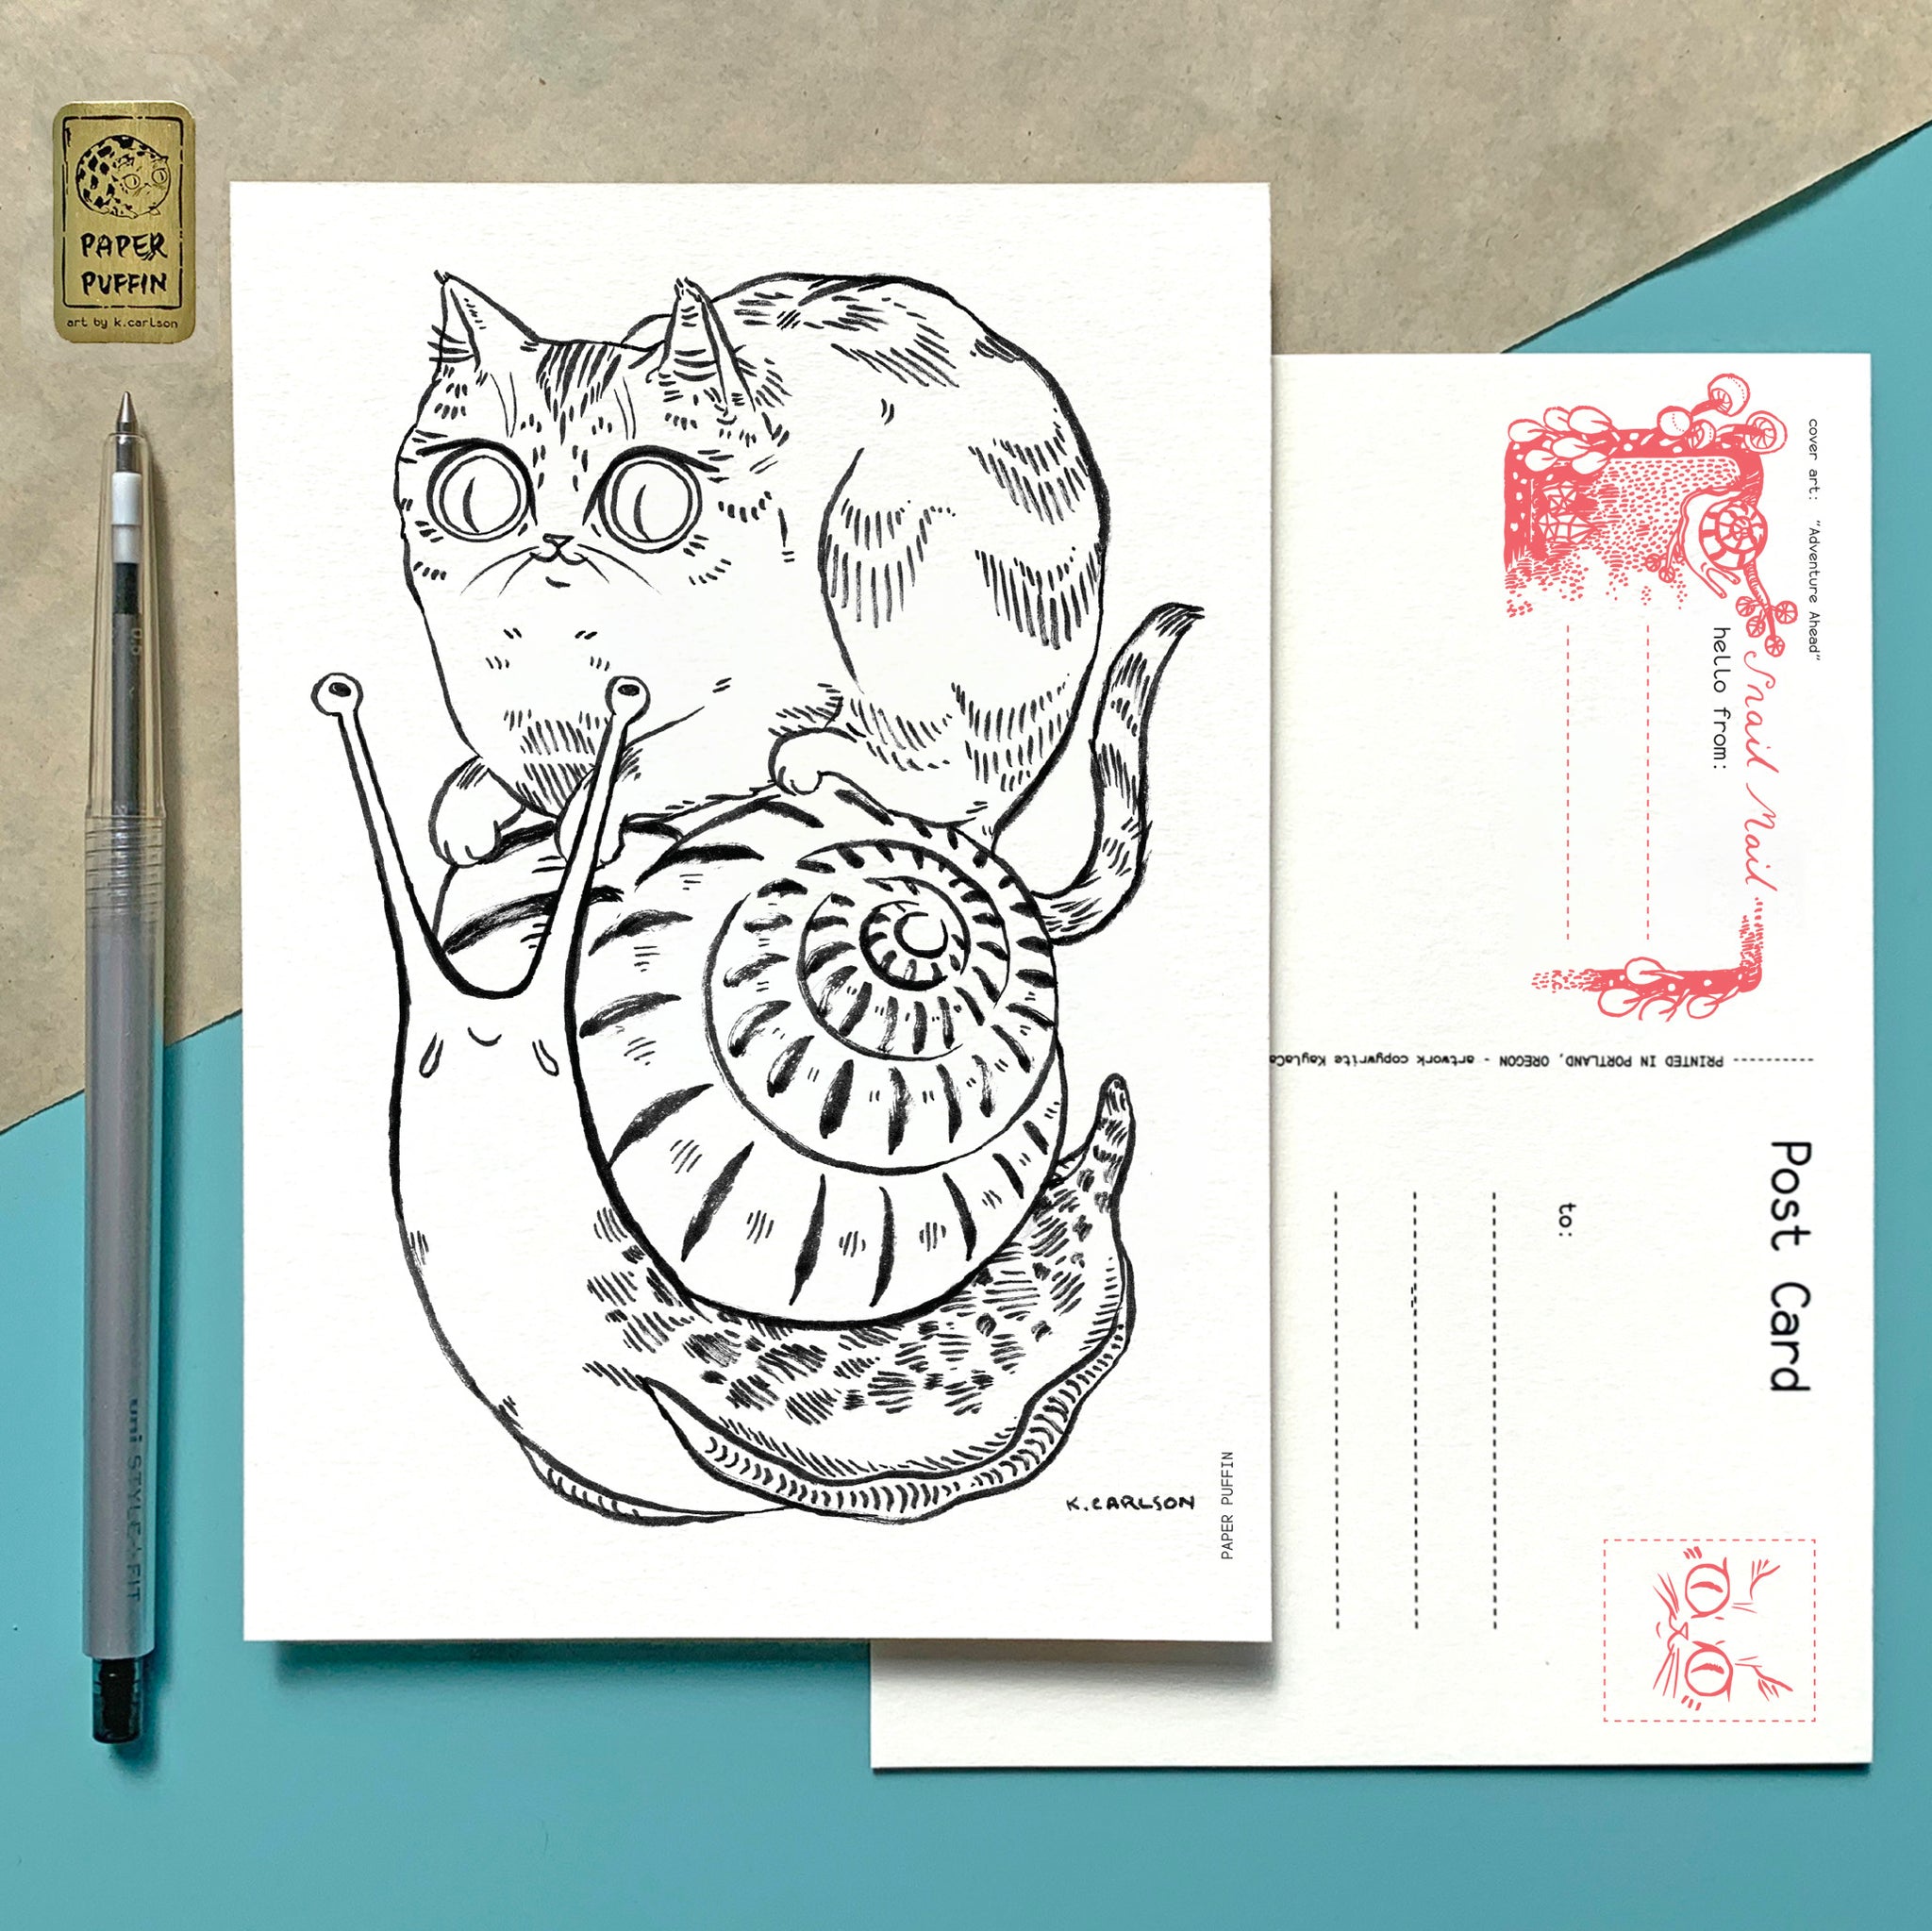 Snail Rider Postcard